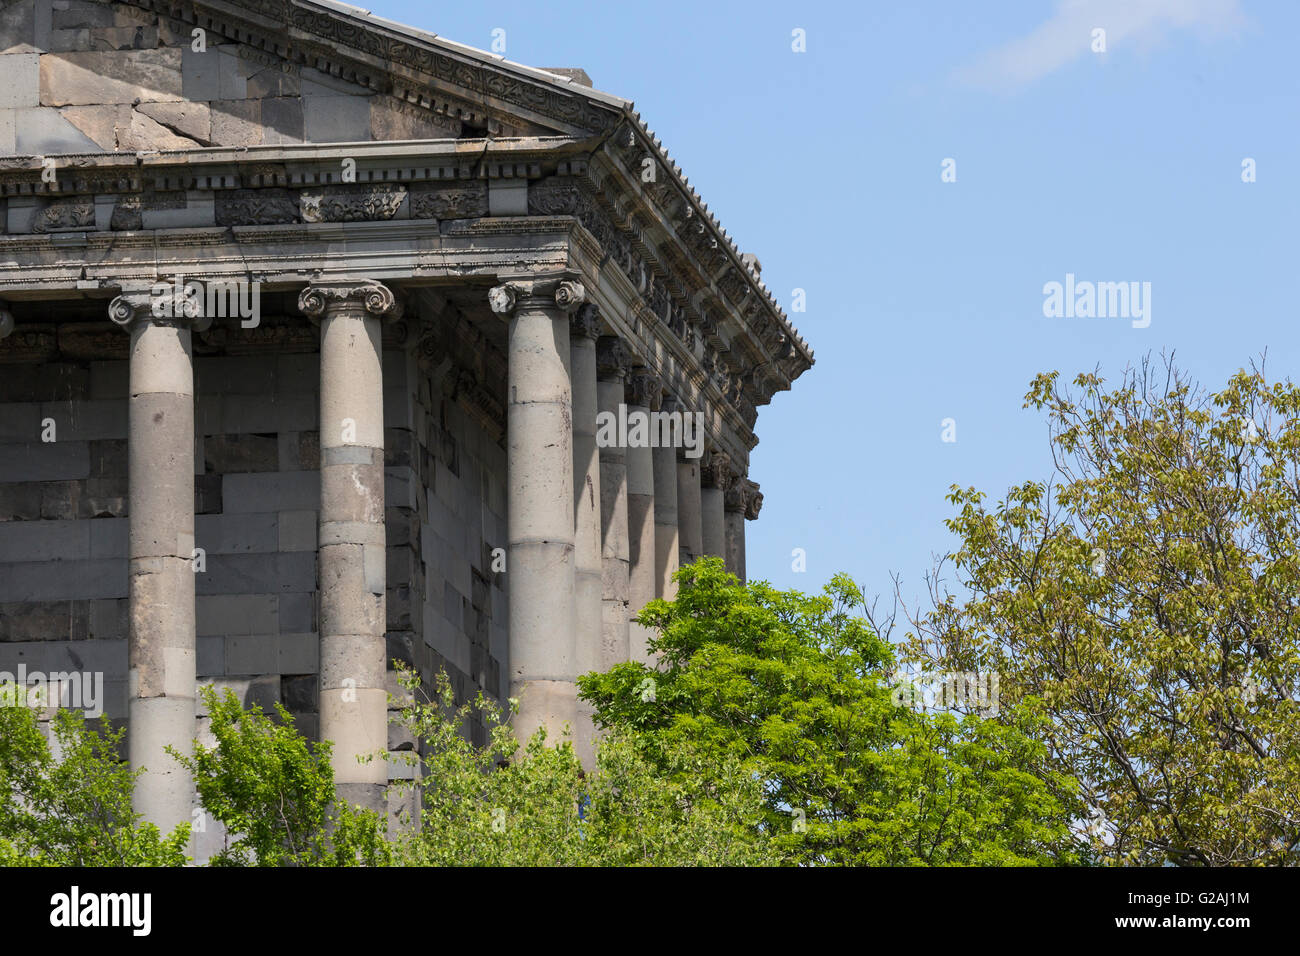 Ancient Garni pagan Temple, the hellenistic temple in Armenia Stock Photo